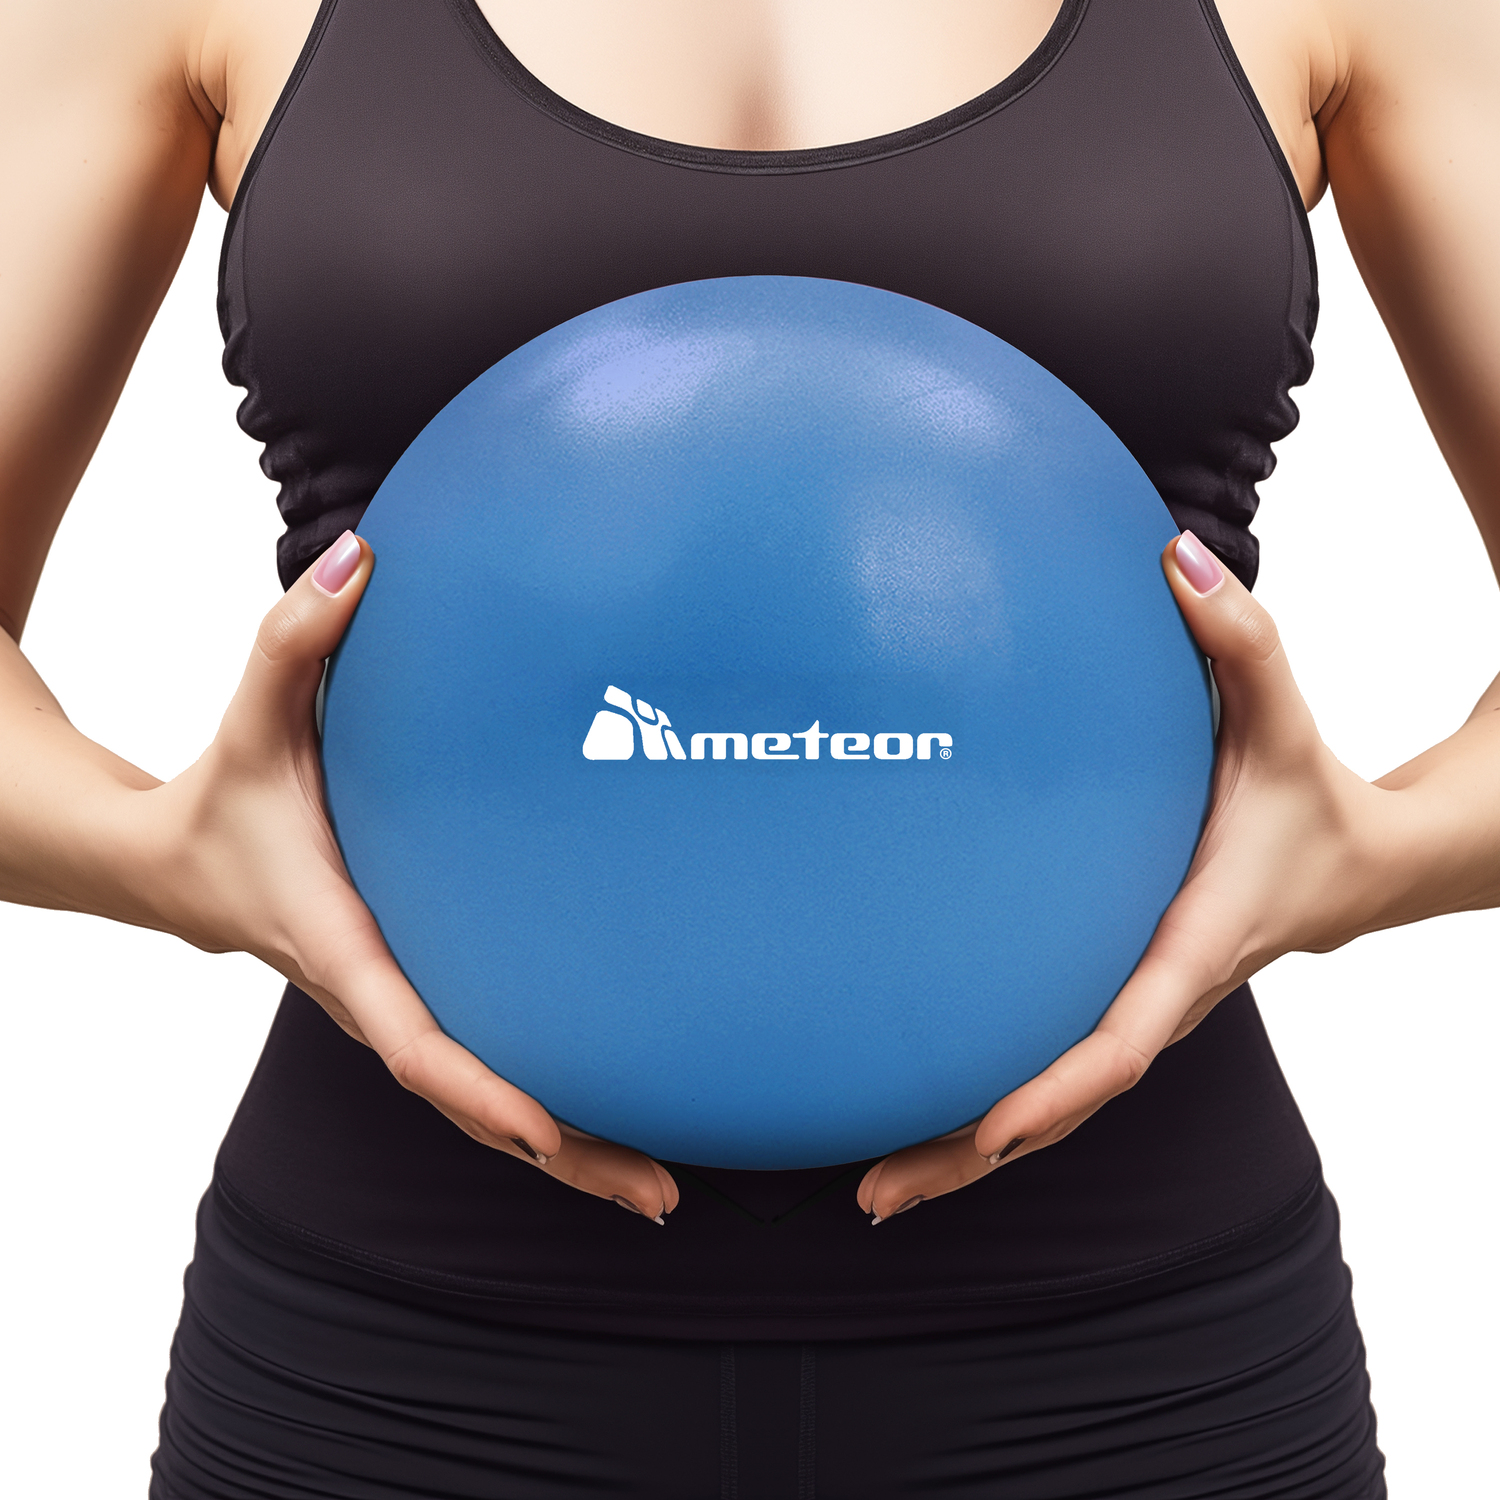 Buy PVC Exercise Pilates Ball Online in New Zealand